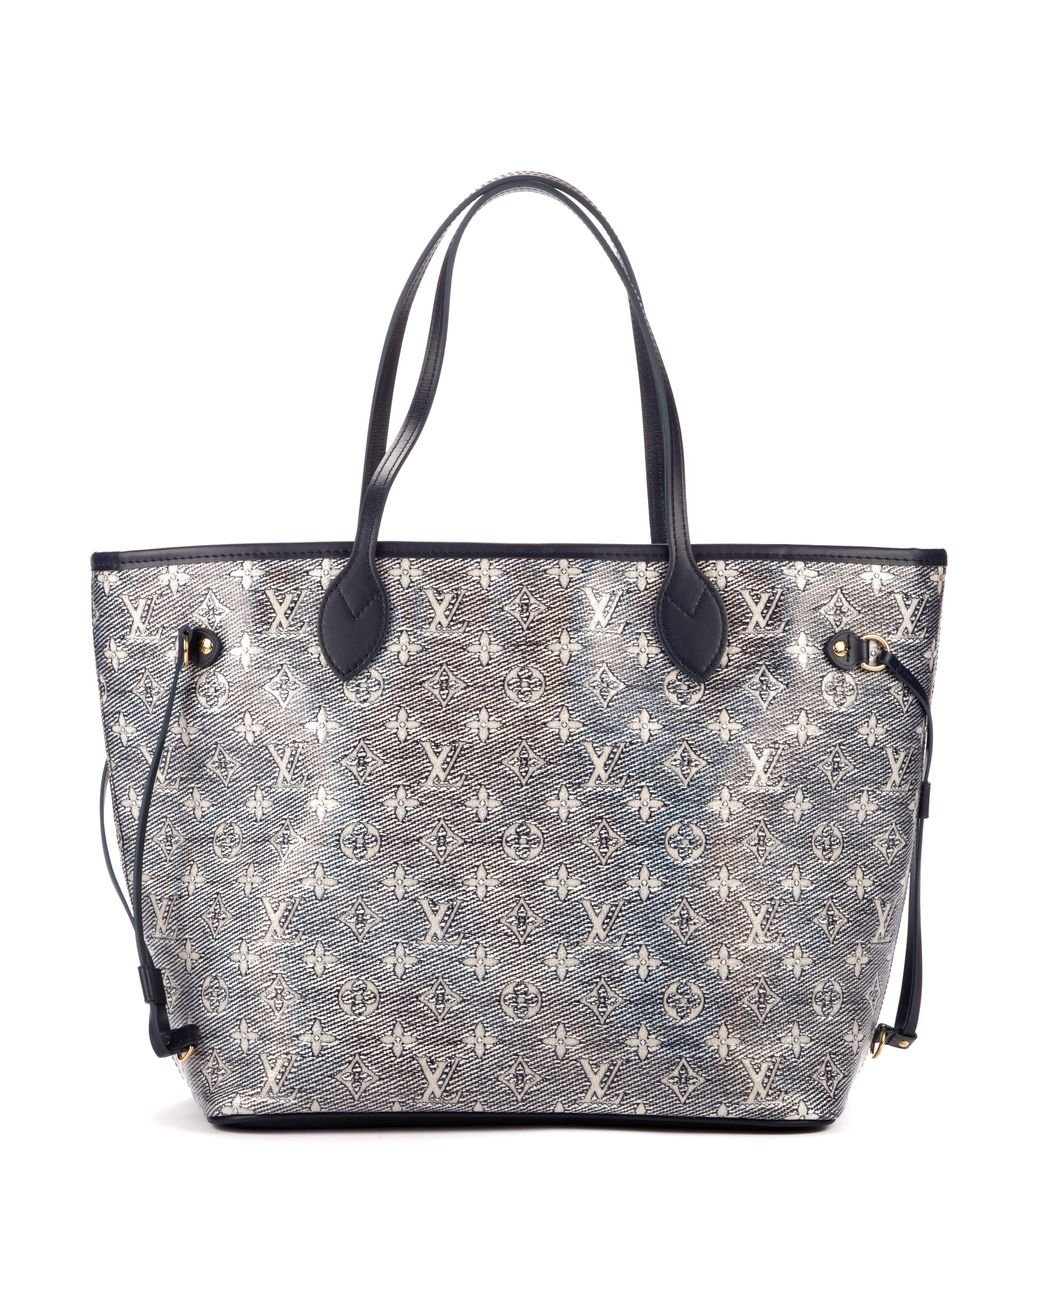 Louis Vuitton Formacetti Monogram Handbag Tote Bag Shoulder Bag